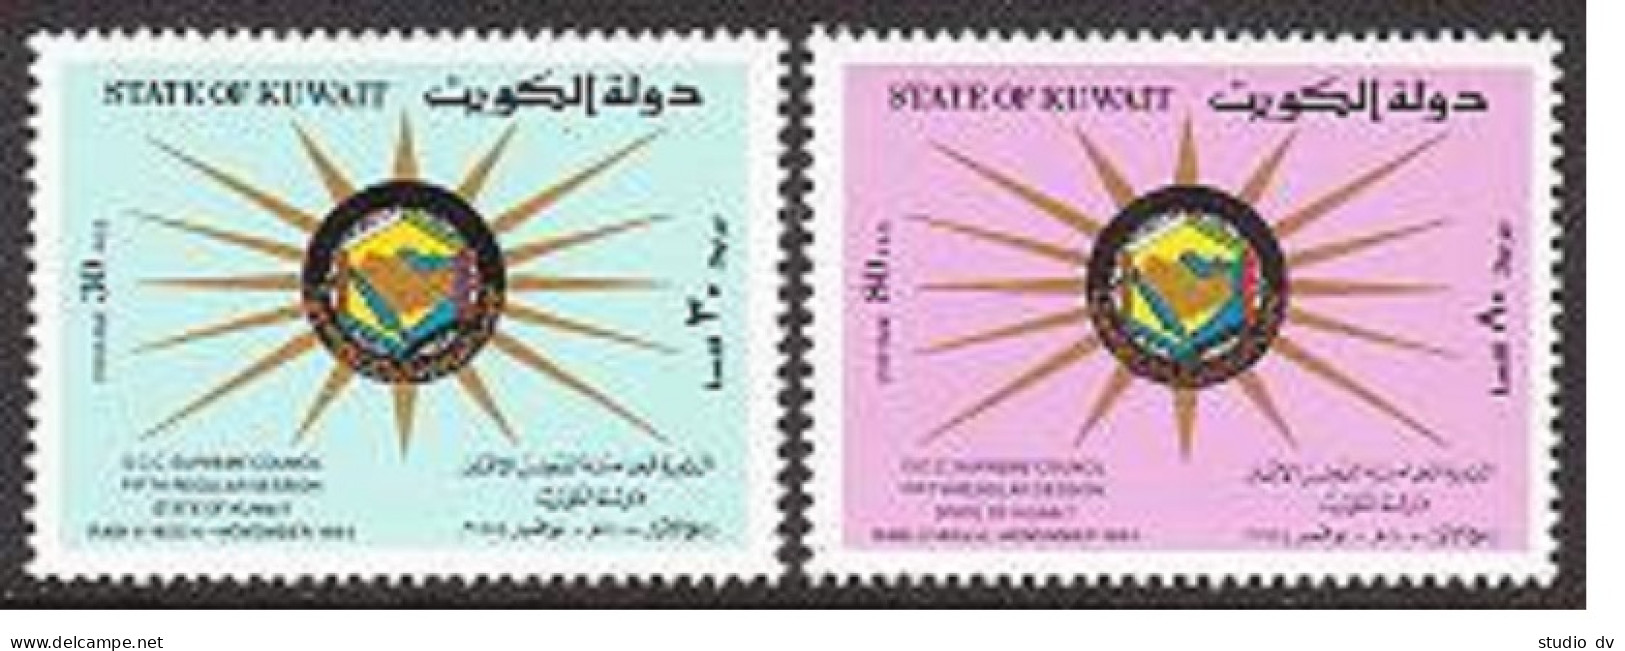 Kuwait 973-974, MNH. Michel 1059-1060. G.C.C. Supreme Council, 5th Session, 1984 - Kuwait